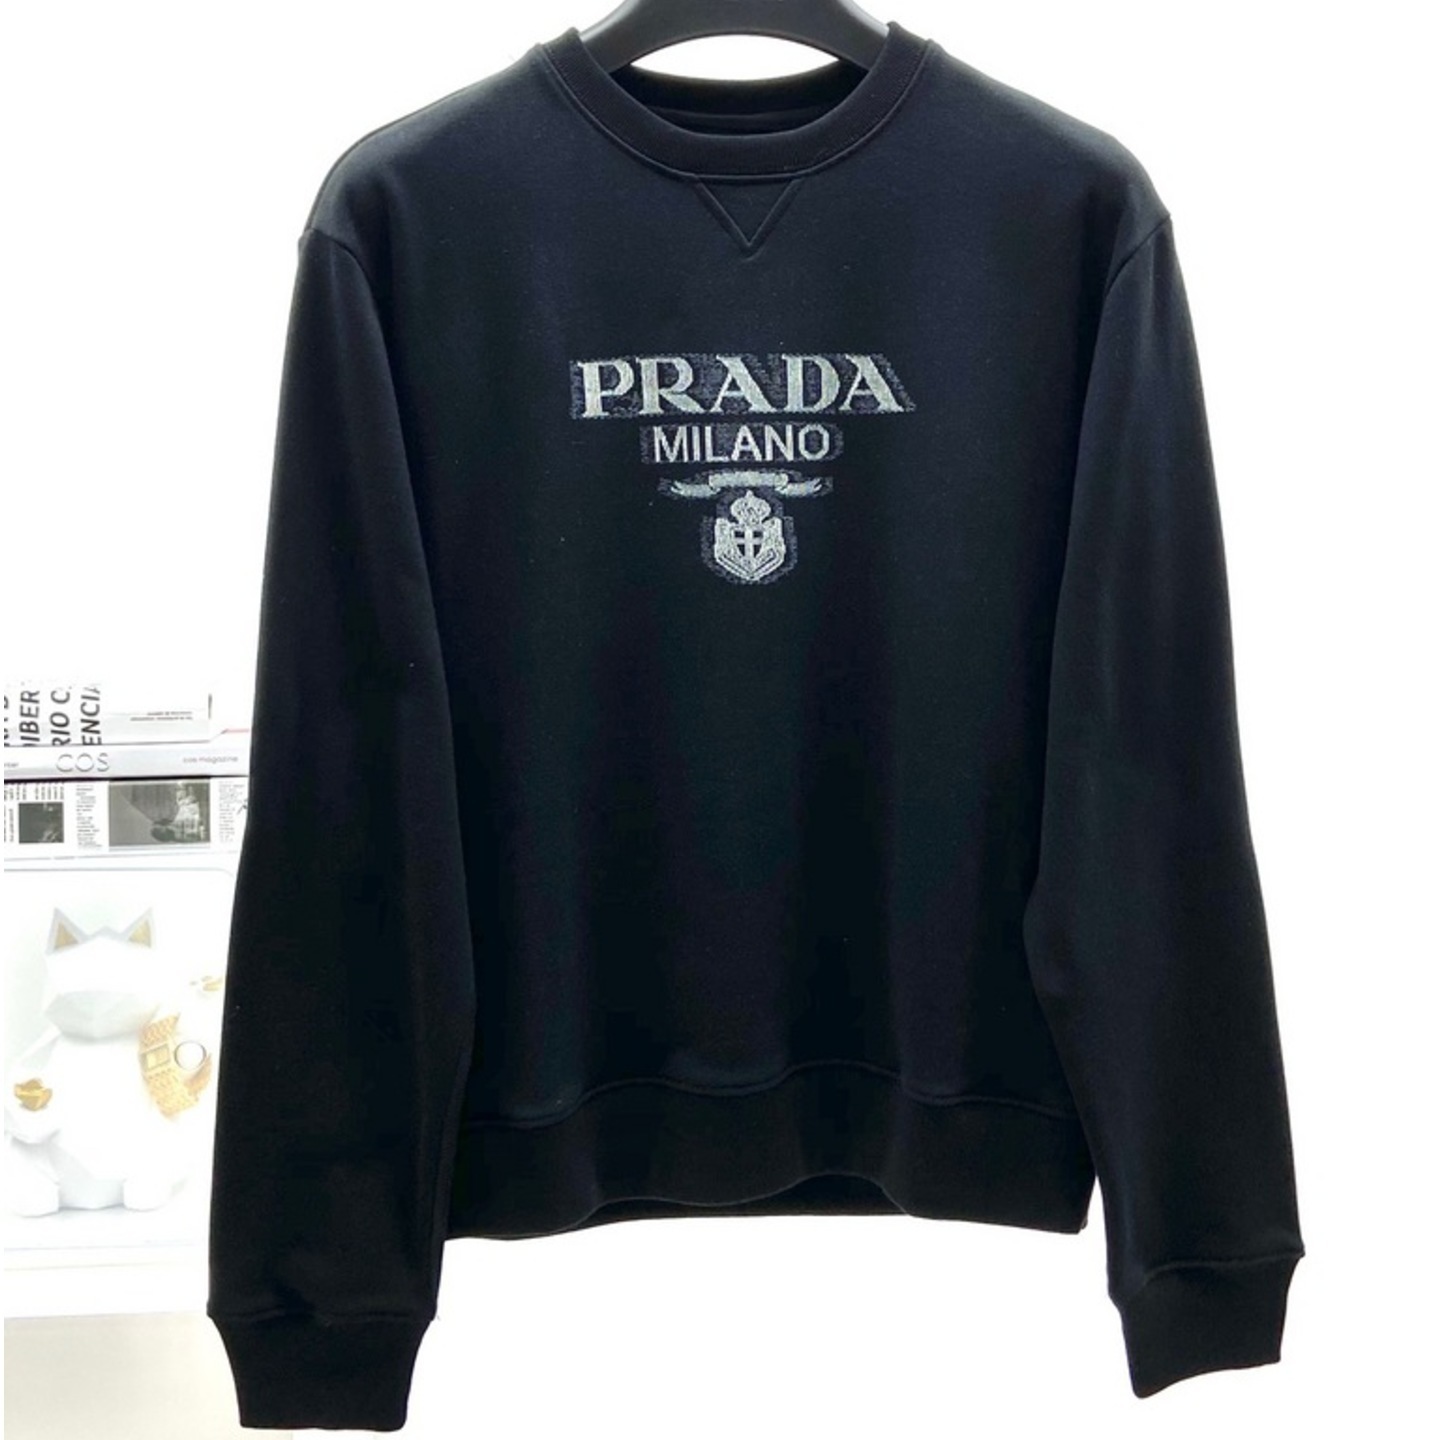  Prada Wool and cashmere crew-neck sweater